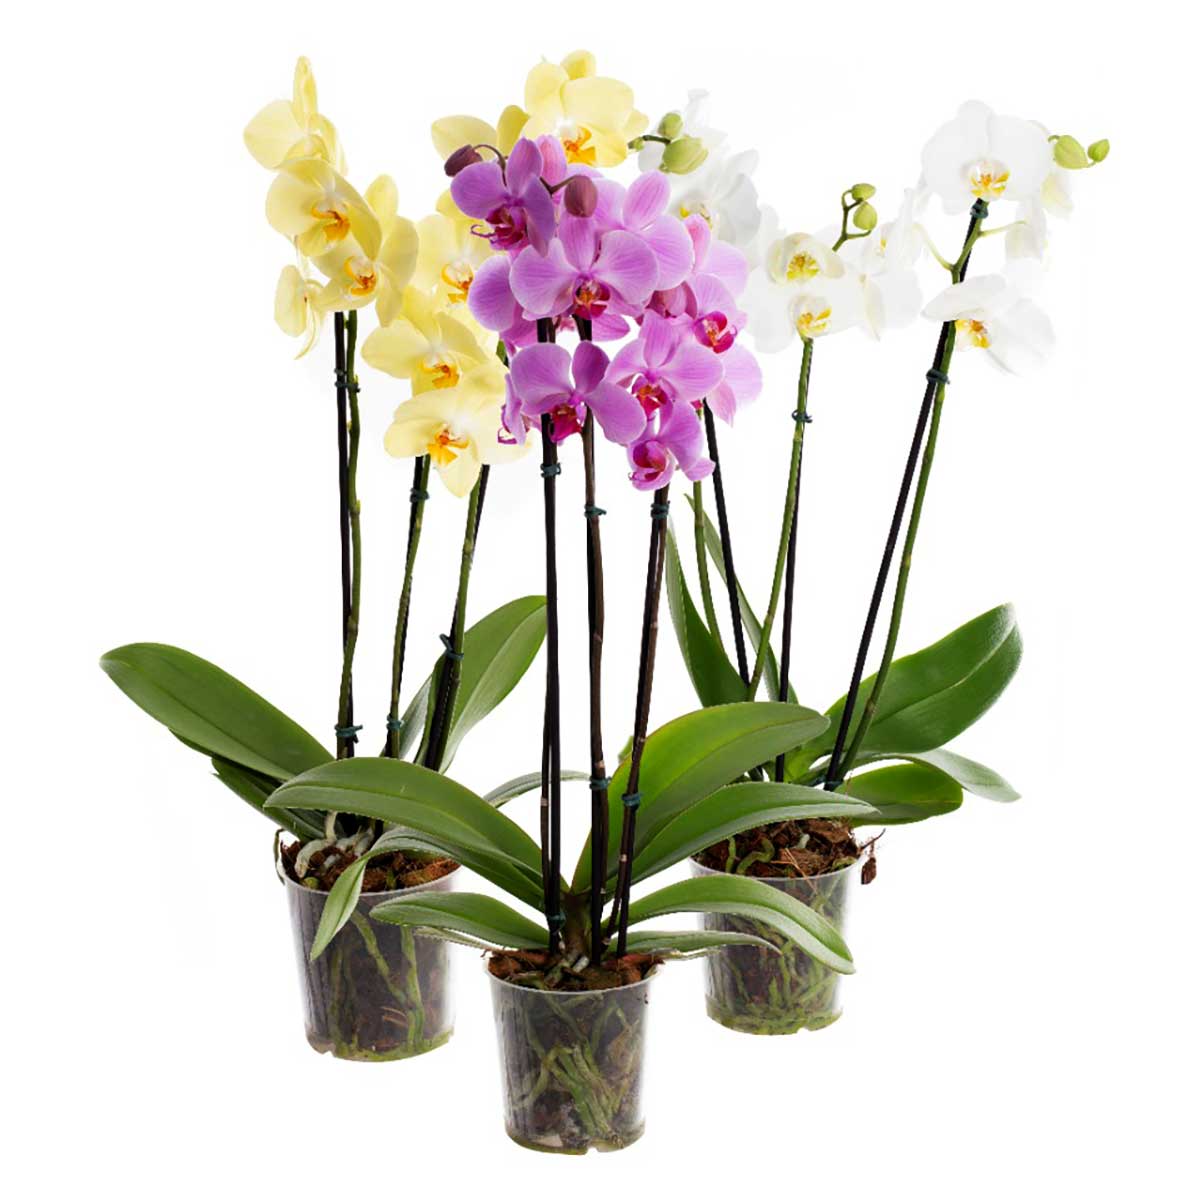 orquidea-phalaenopsis-veiling-holambra-vaso-12cm---cores-variadas-1.jpg